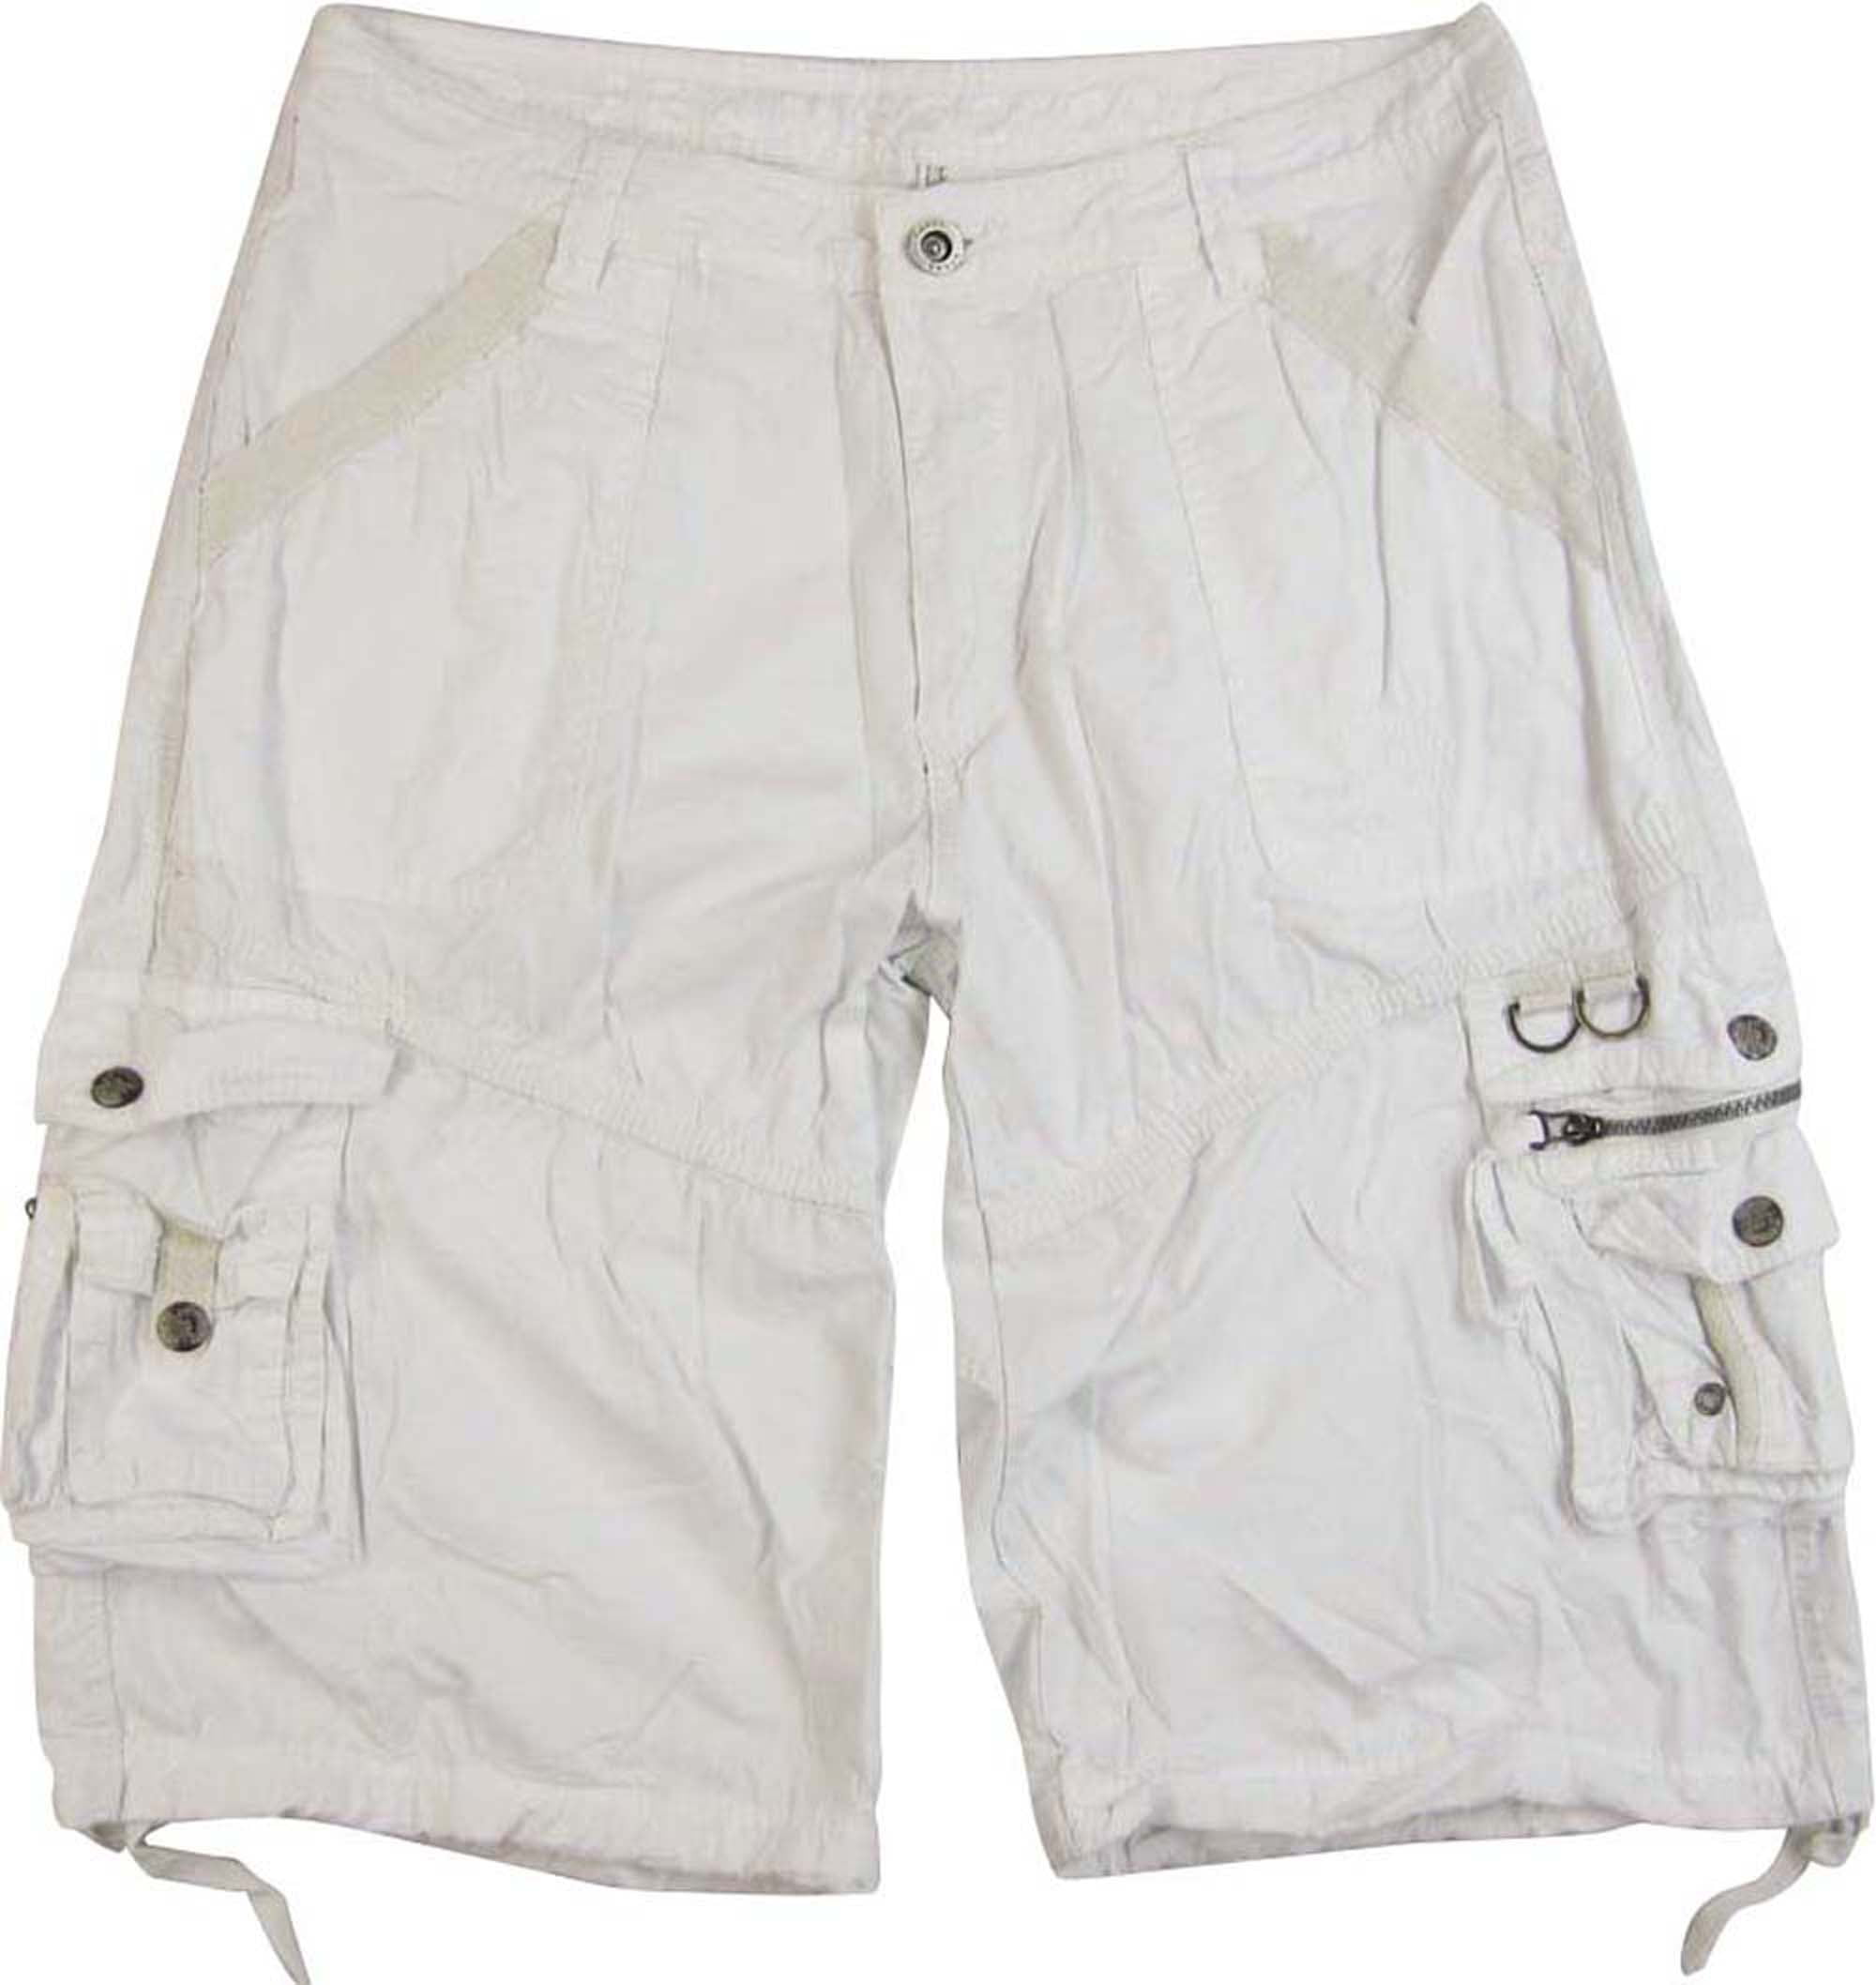 Mens Military Cargo Shorts #055 White Size 36 - Walmart.com